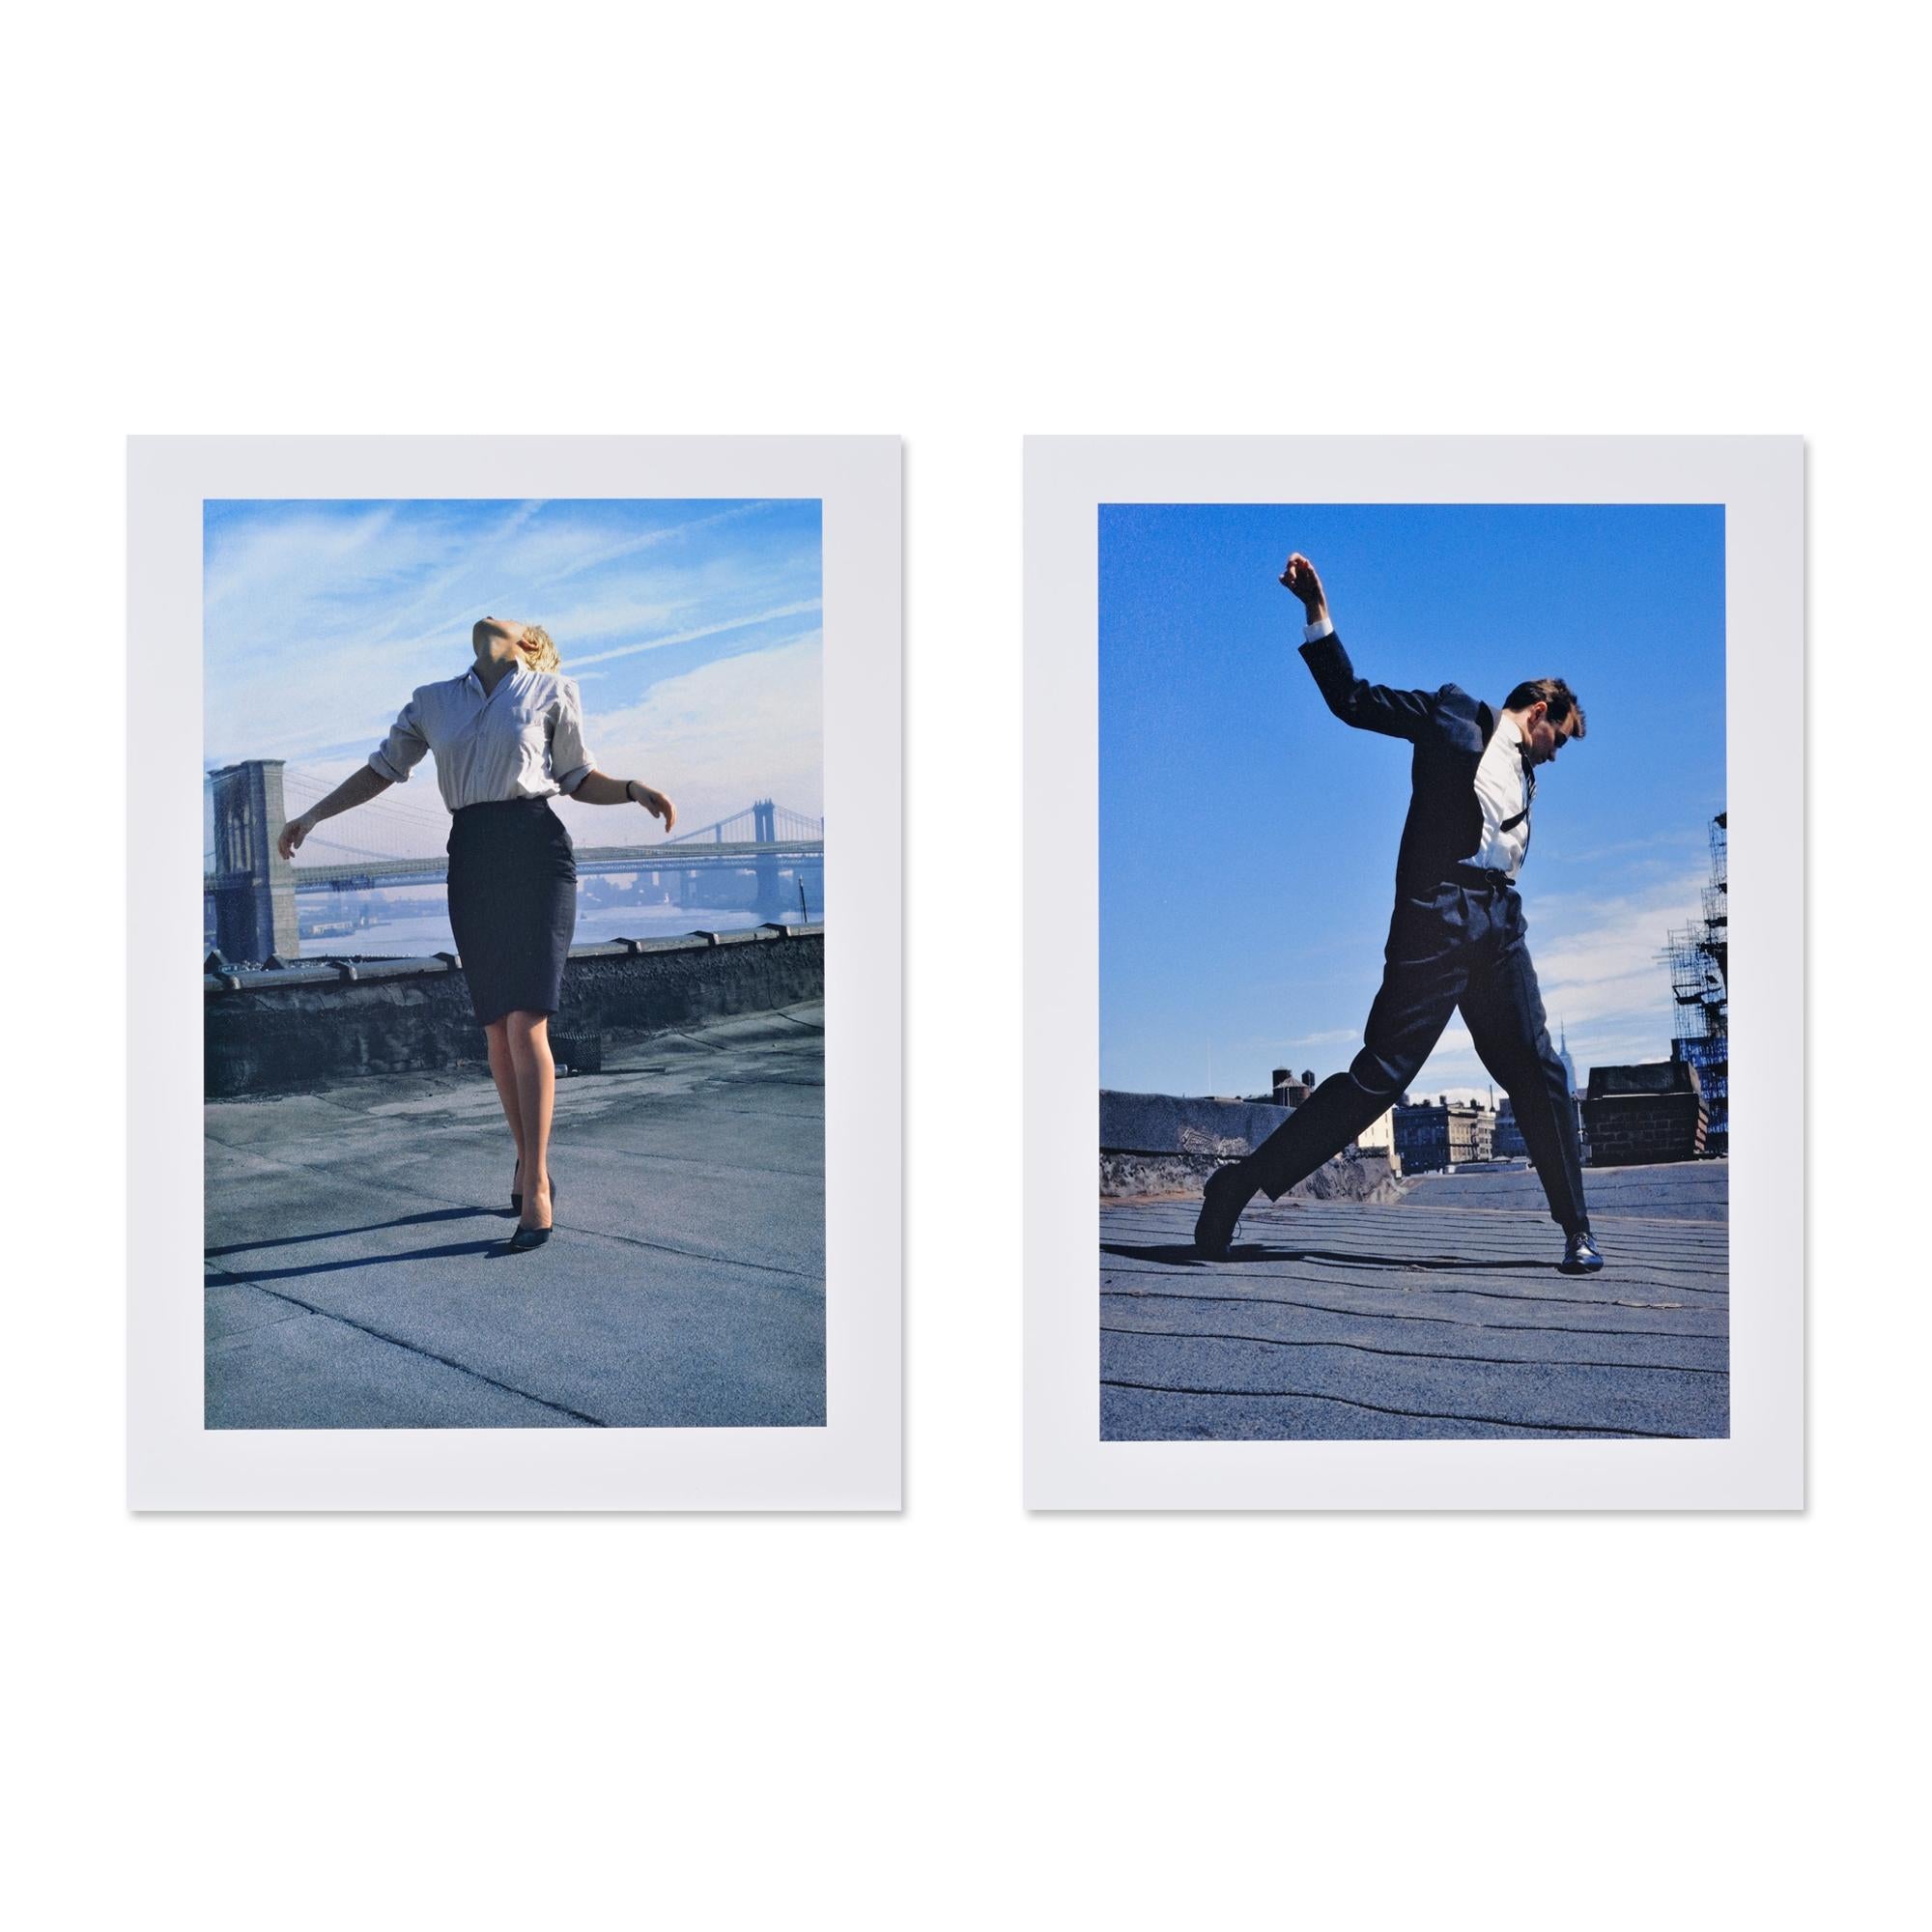 Robert Longo Color Photograph - Cindy and Eric, Set of 2 Archival Pigment Prints, Contemporary Art, 21st Century